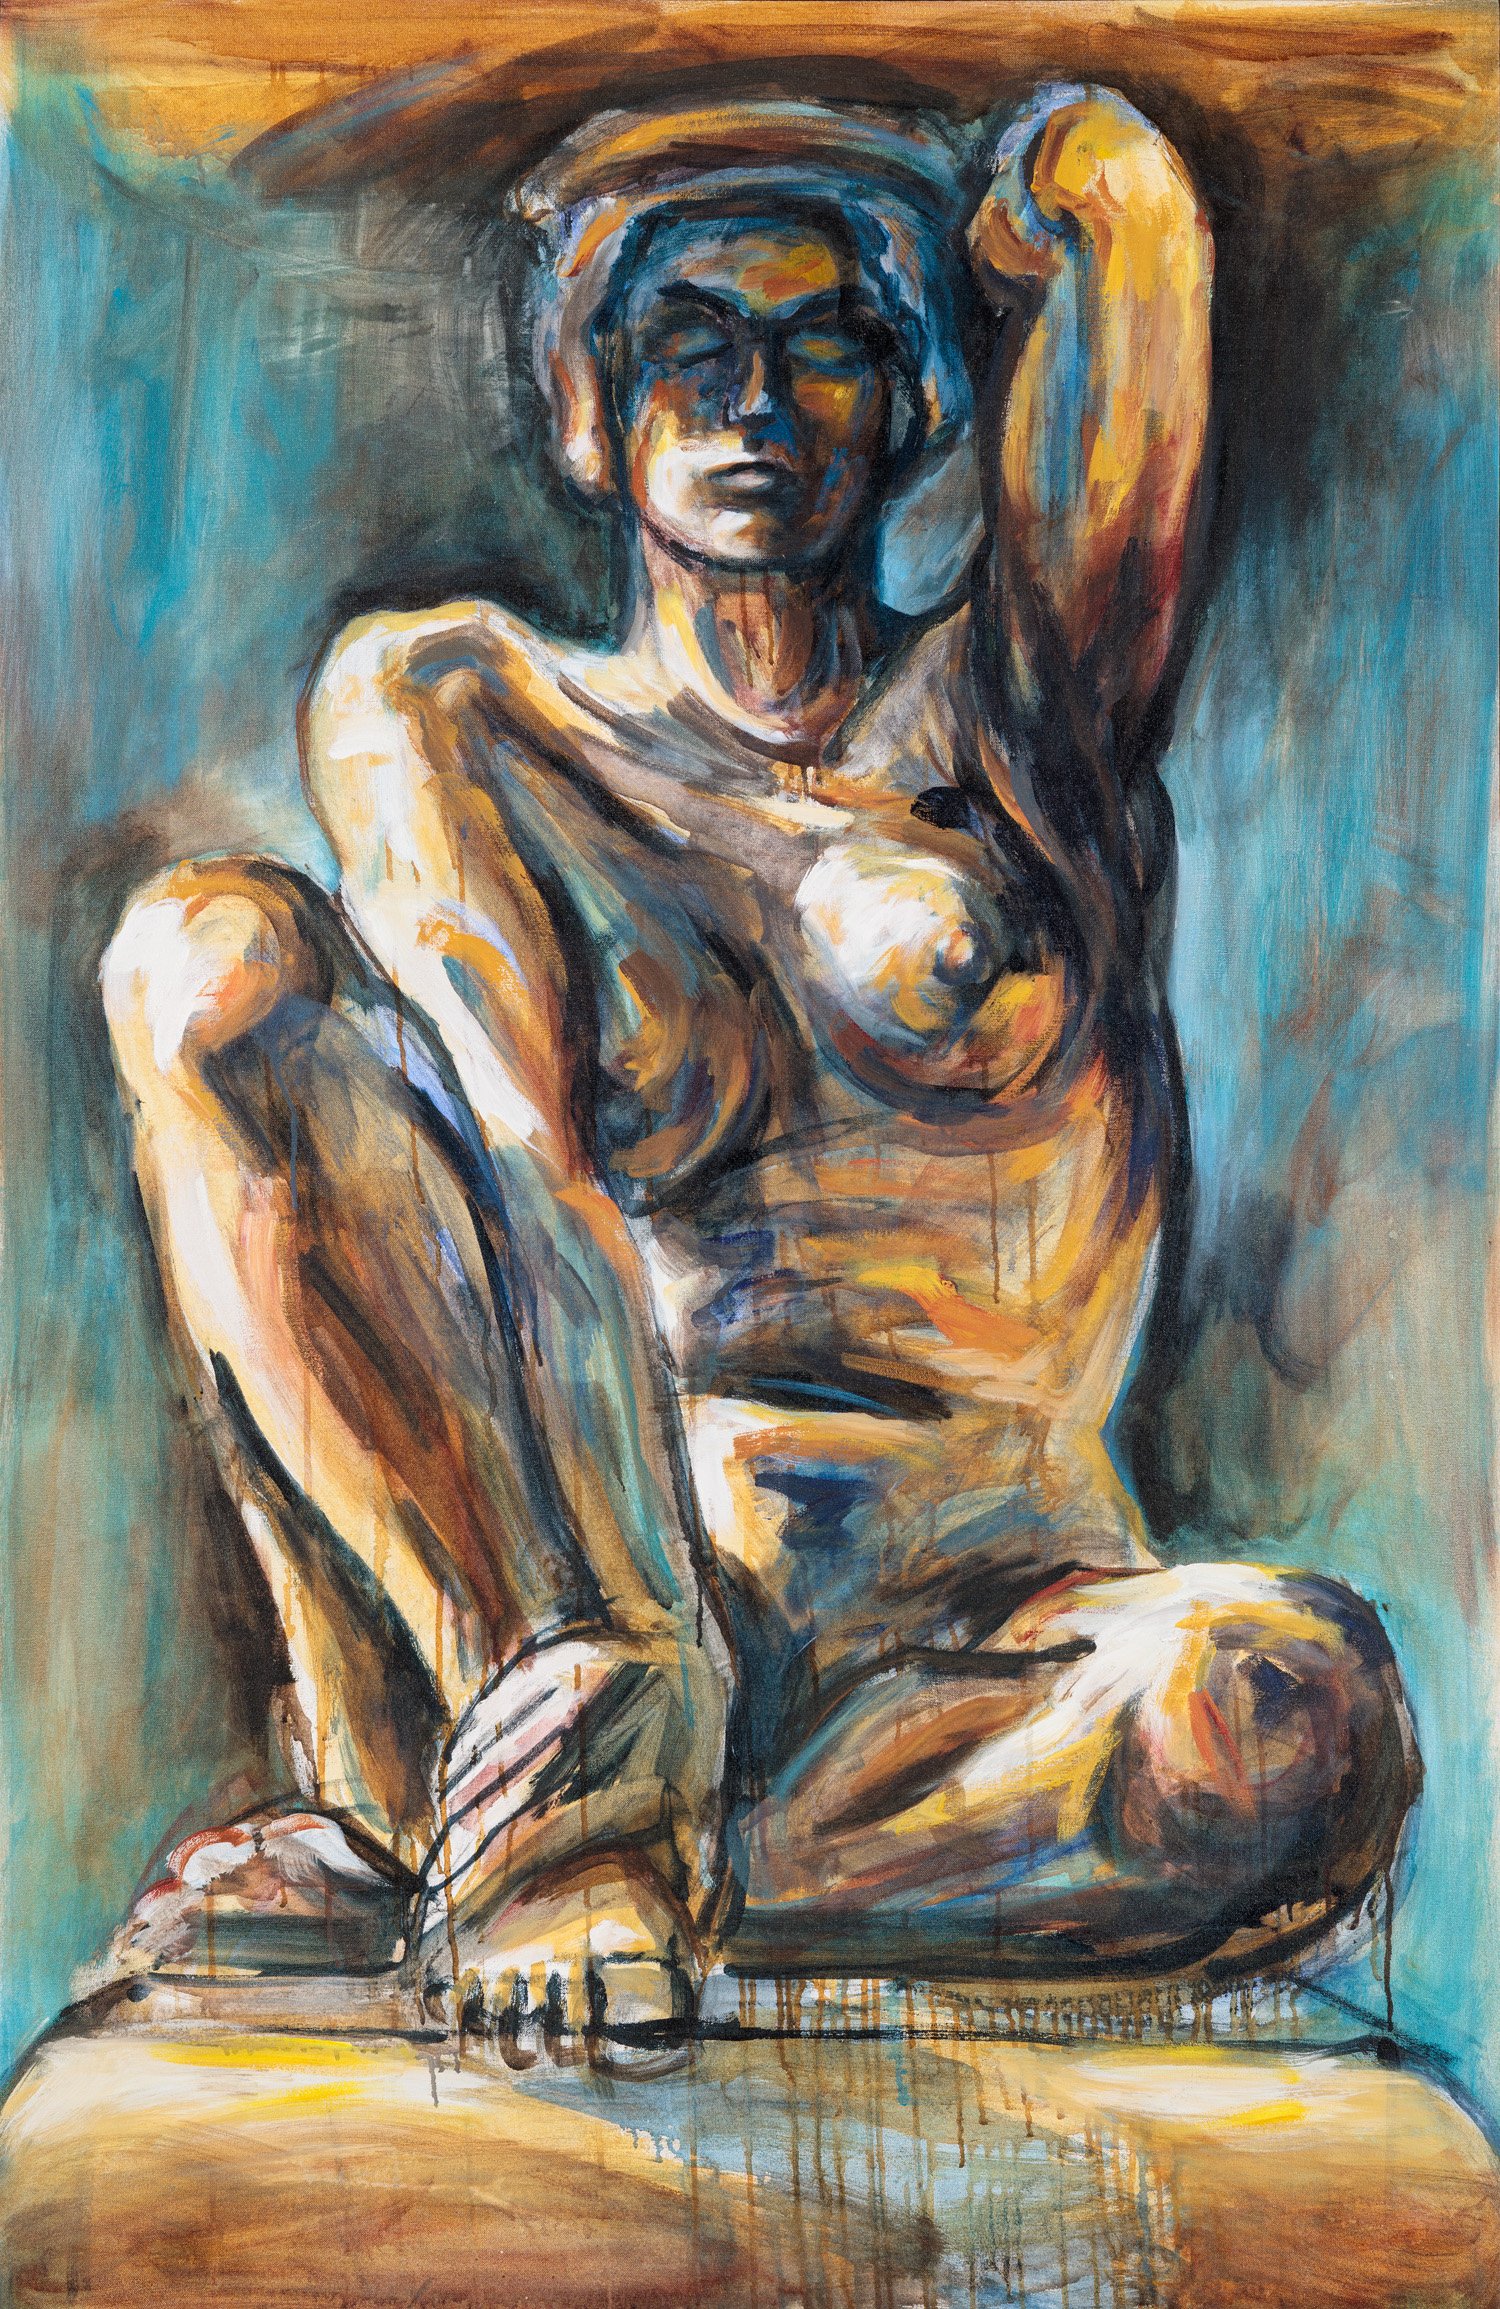 Constans - 67” x 44”, Acrylic on Canvas, $5000